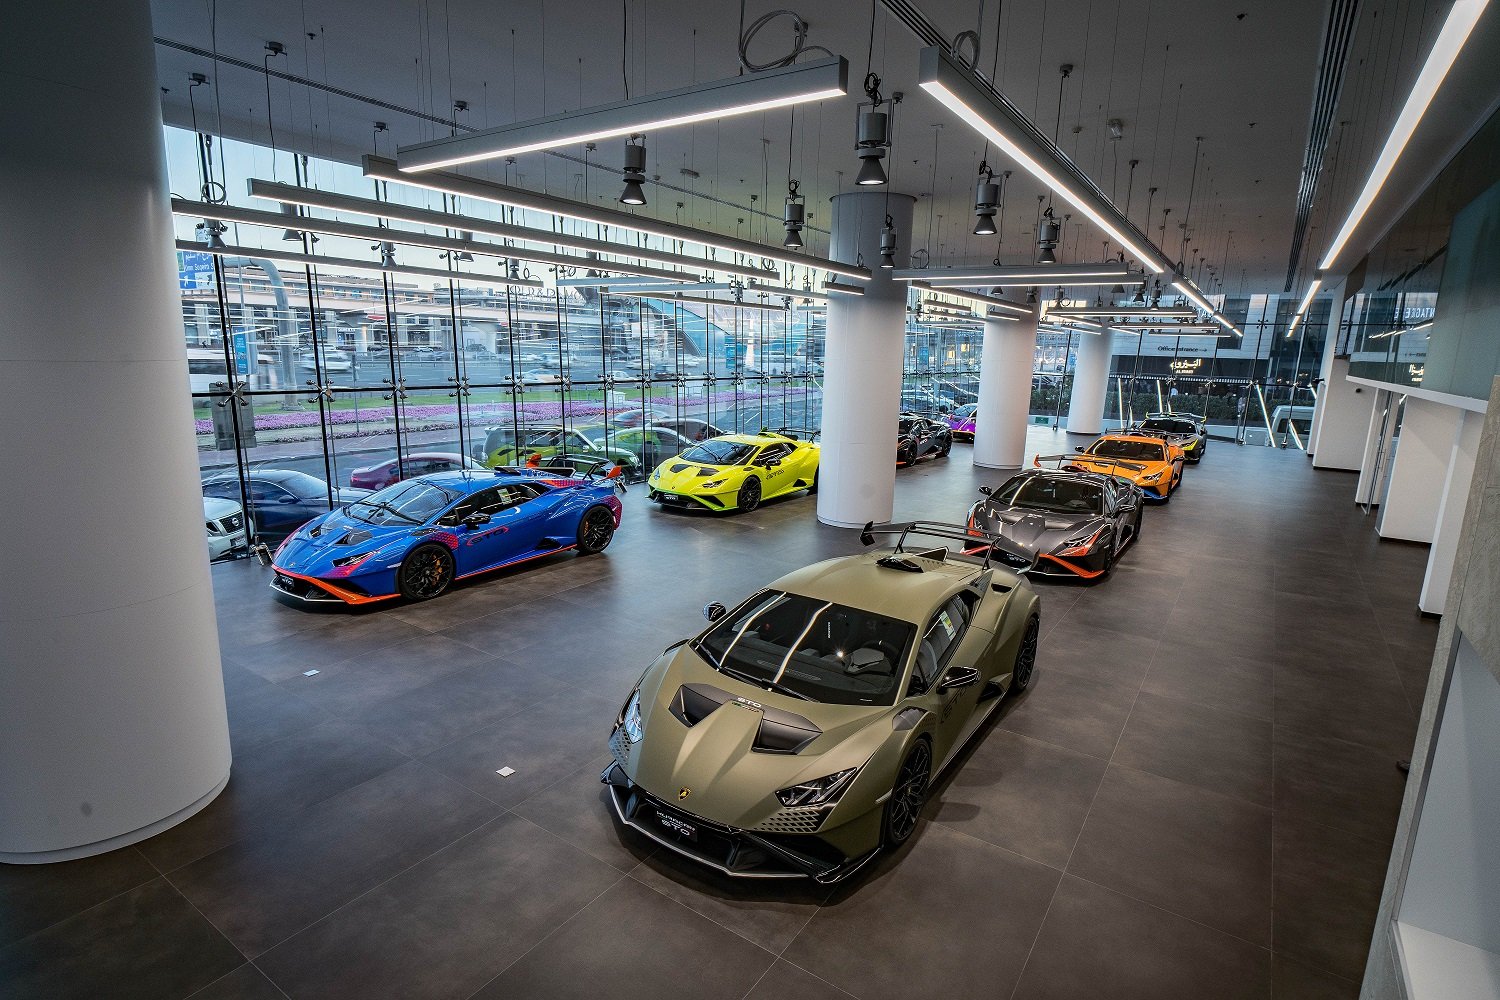 Ultimate Motors - The New Authorised Dealer for Automobili Lamborghini in Dubai & Abu Dhabi